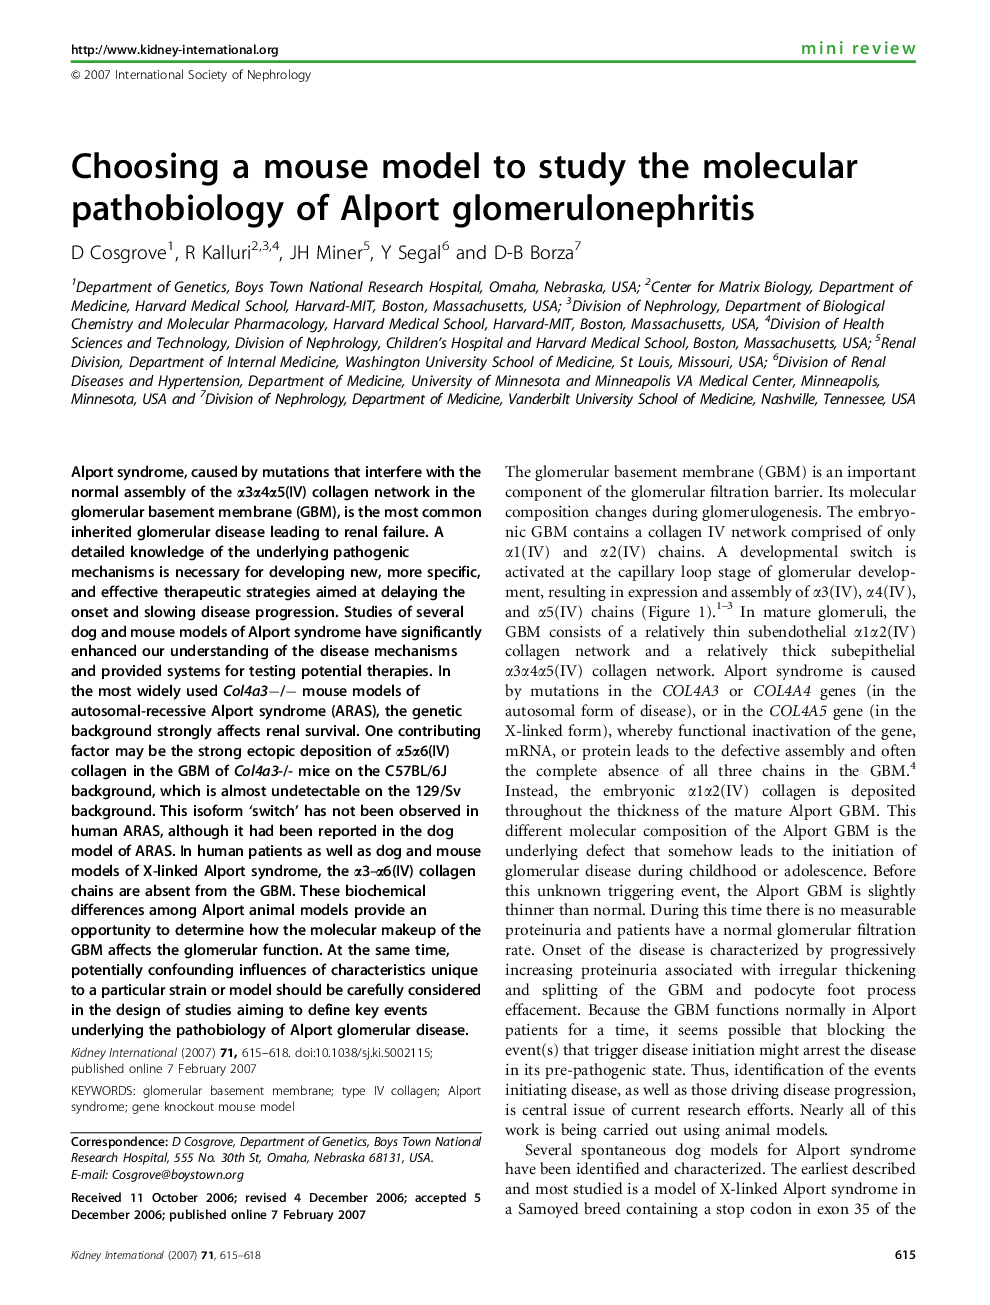 Choosing a mouse model to study the molecular pathobiology of Alport glomerulonephritis